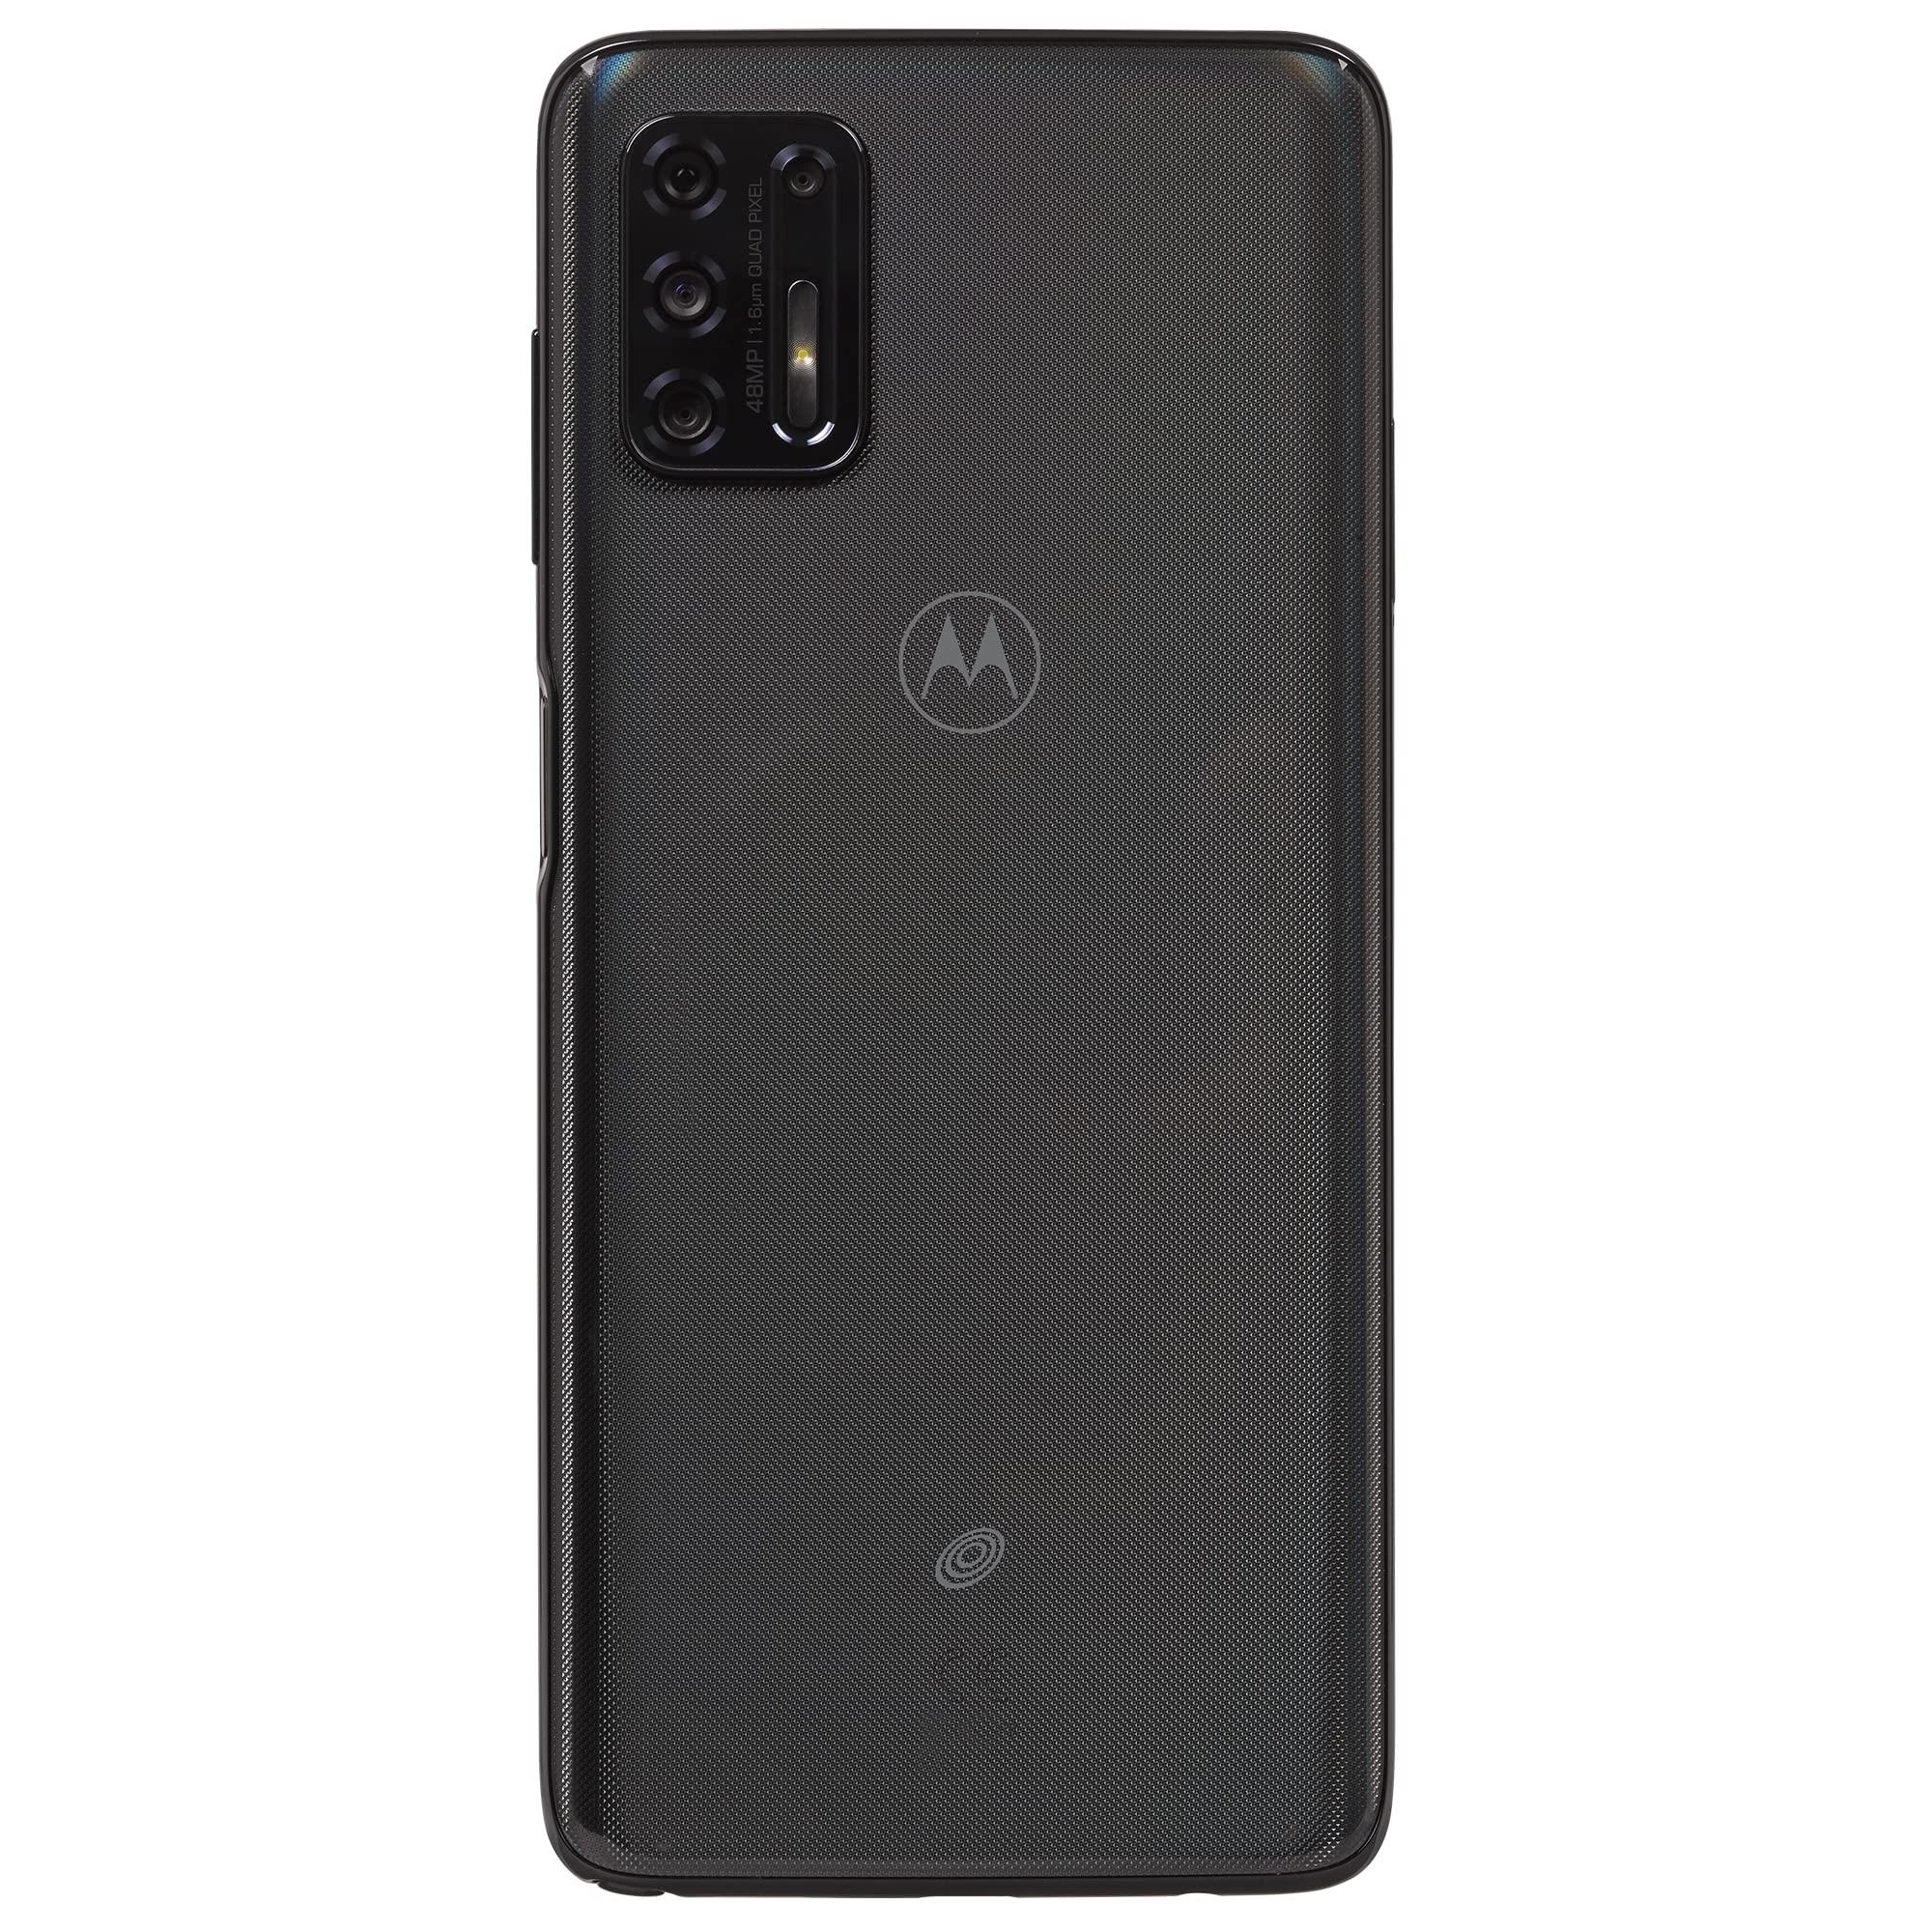 Tracfone Motorola moto g Stylus (2020), 128GB, Gray - Prepaid Smartphone (Locked)